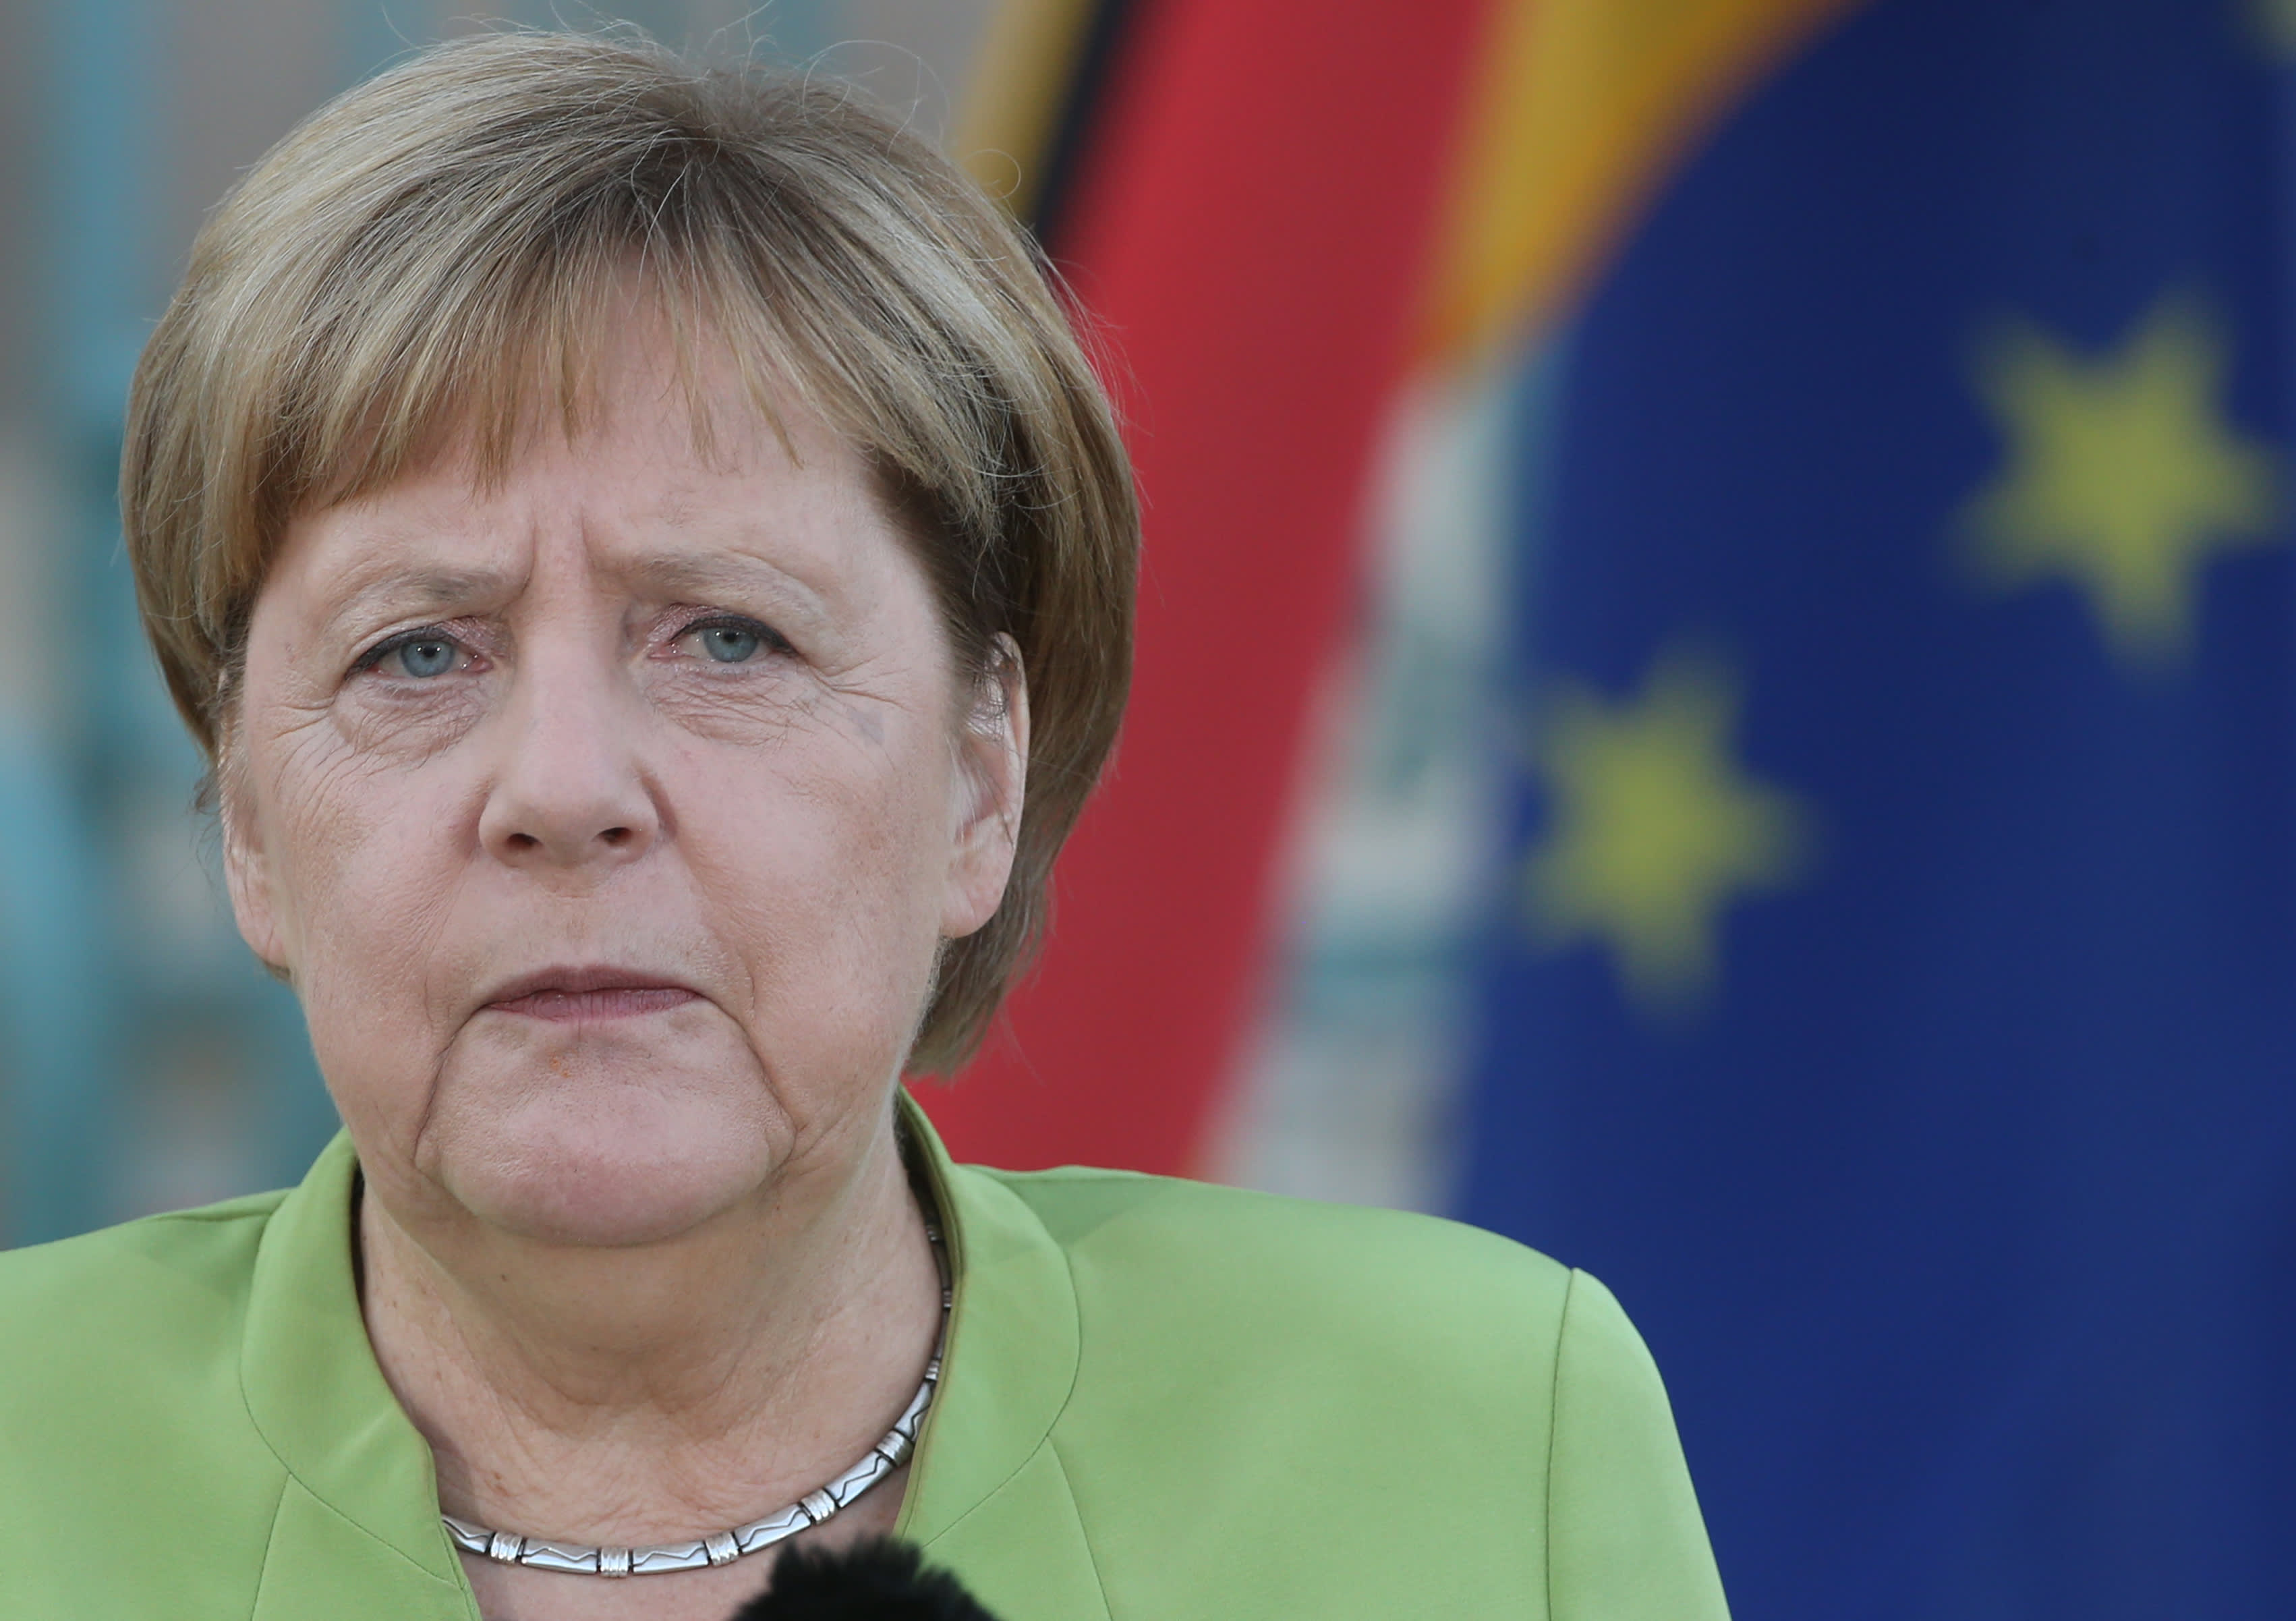 Chancellor Angela Merkel confirms she will not run for a fifth term as German leader